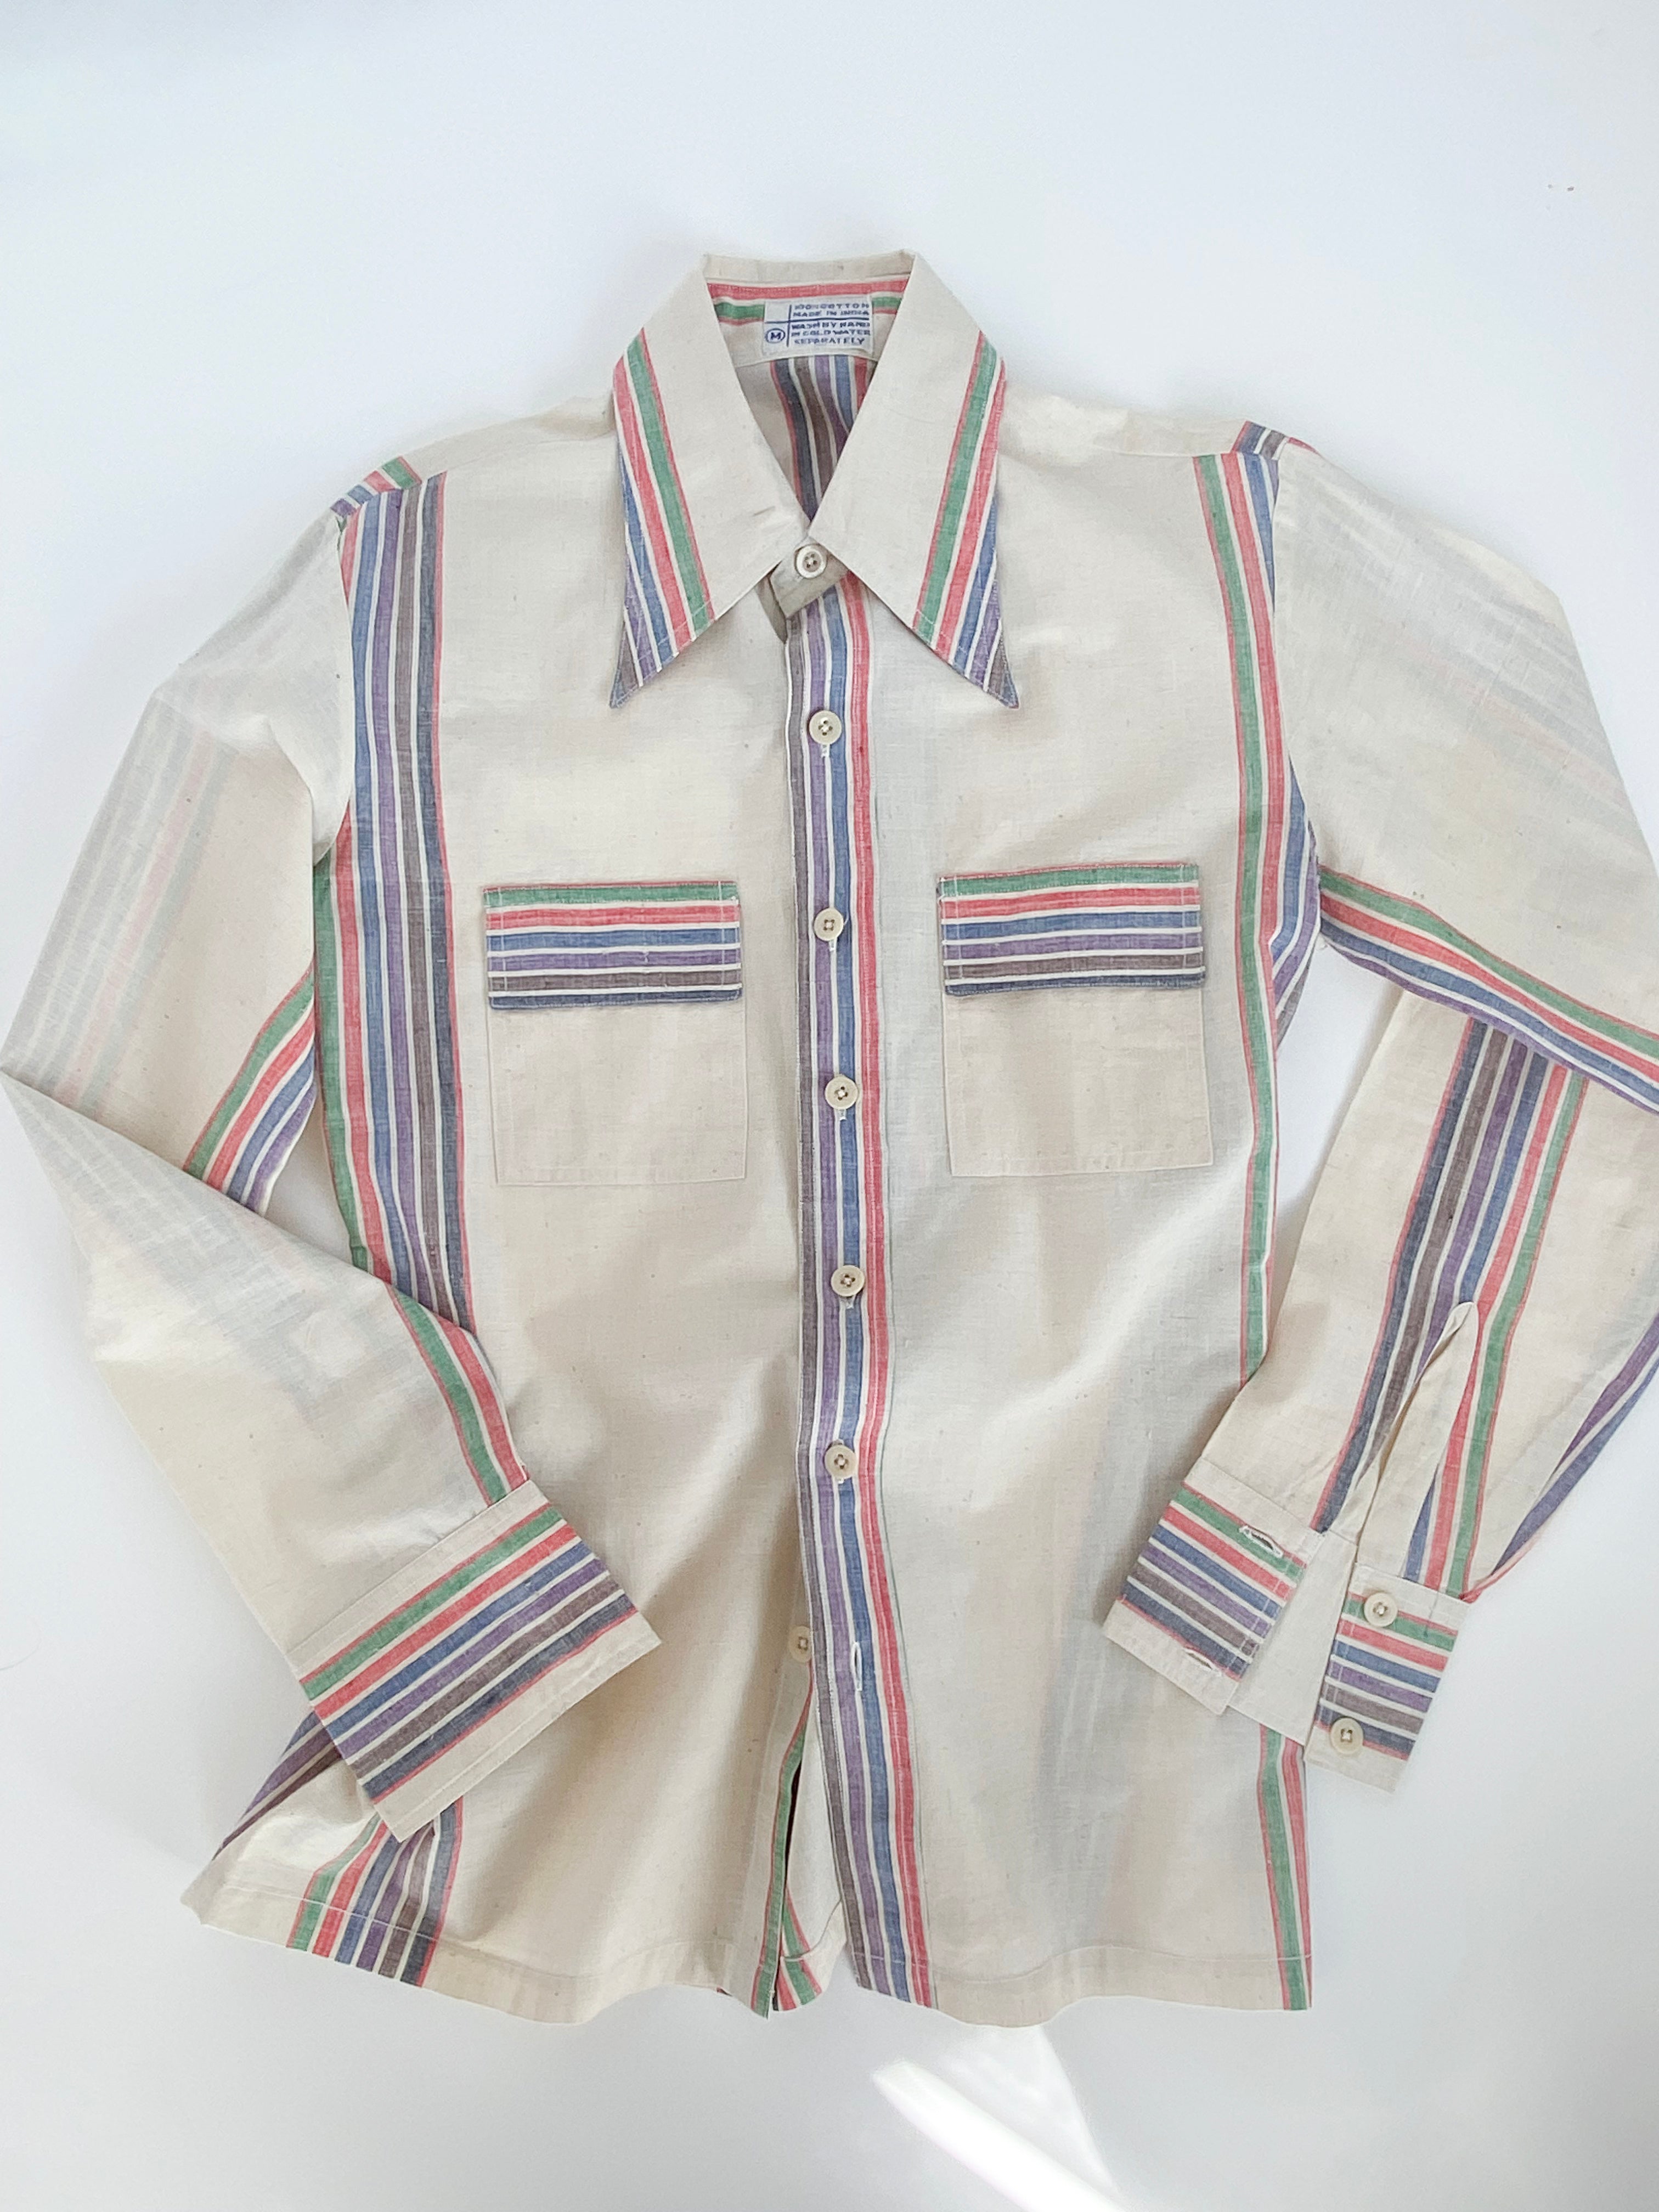 70's Indian cotton shirt